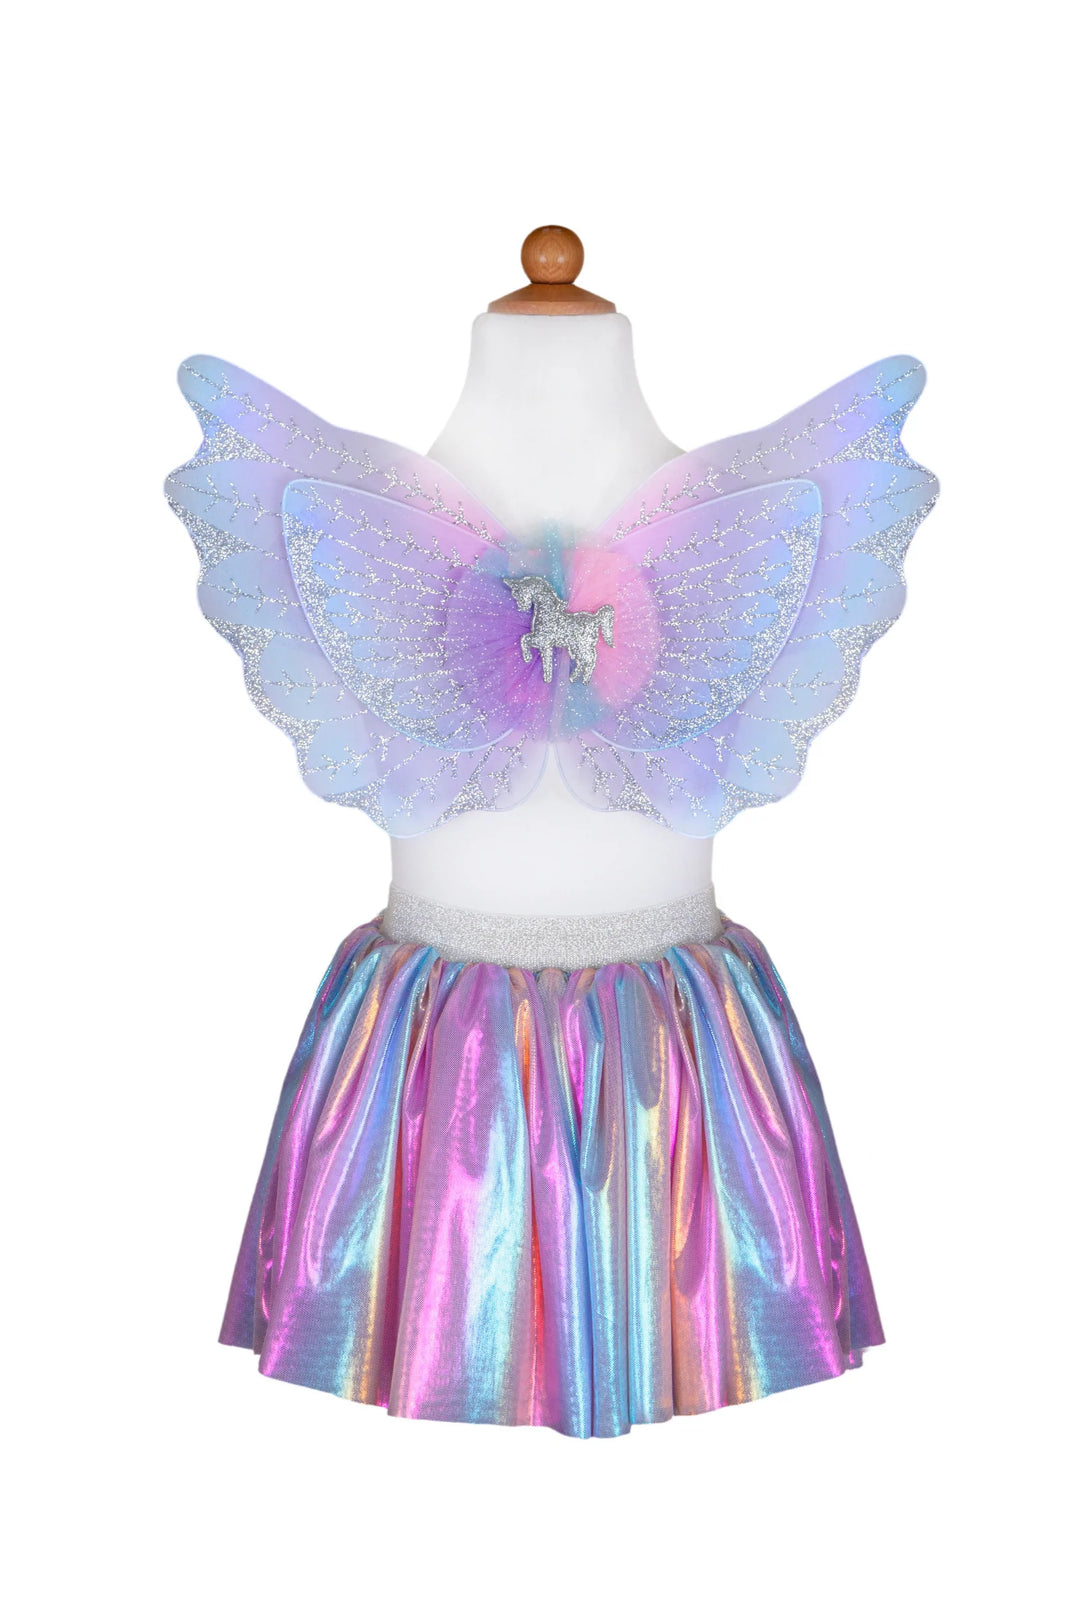 Great Pretenders Magical Unicorn Skirt and Wings |Mockingbird Baby & Kids